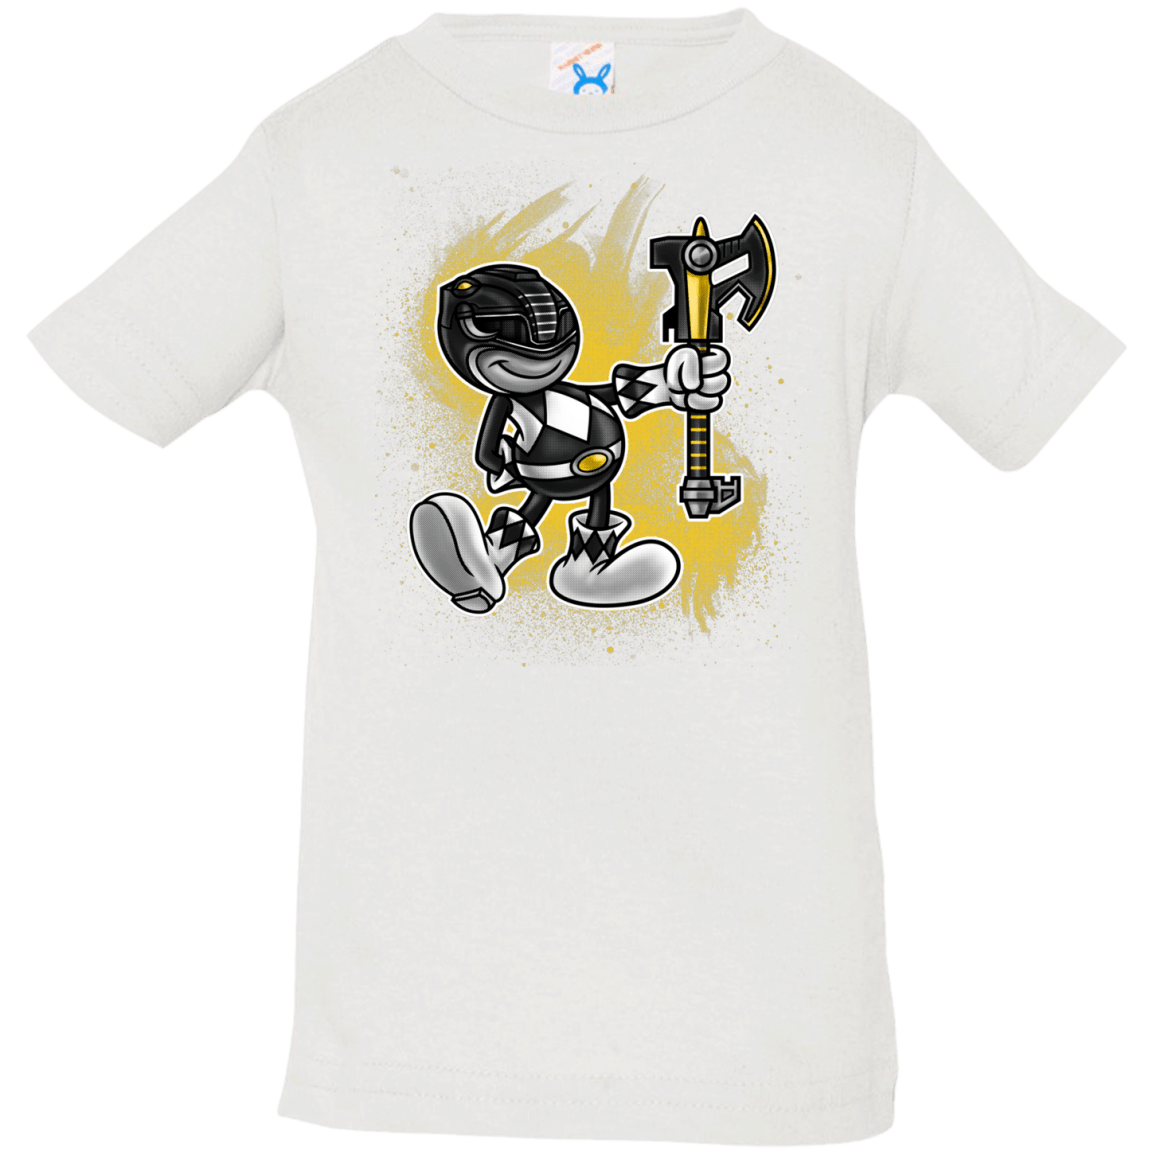 T-Shirts White / 6 Months Black Ranger Artwork Infant PremiumT-Shirt